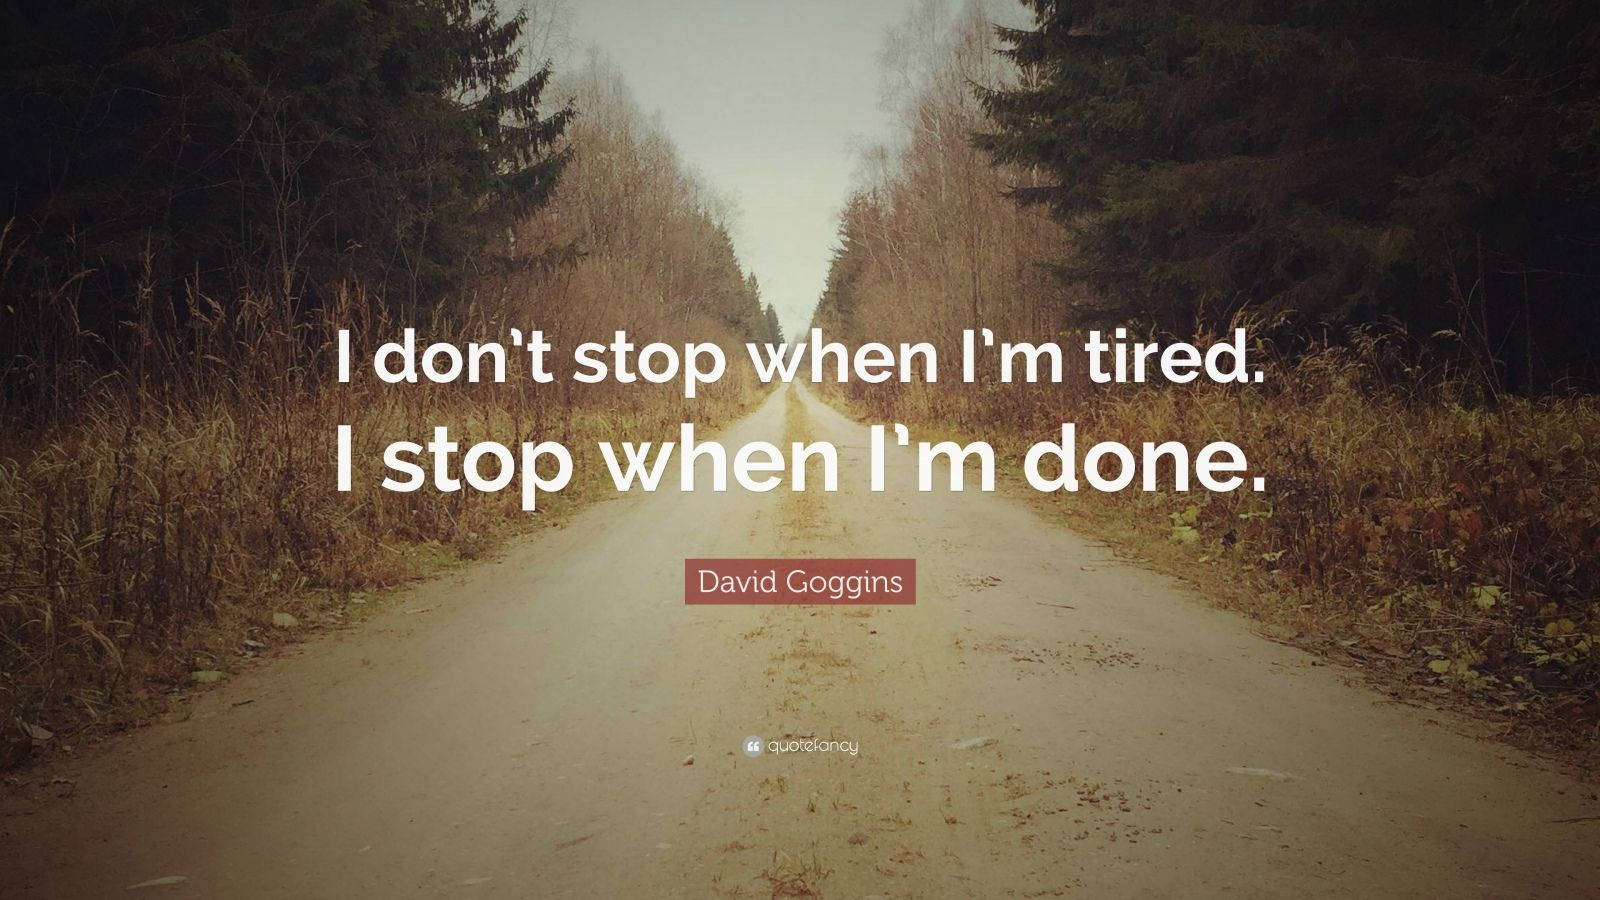 David Goggins Quote On Empty Road